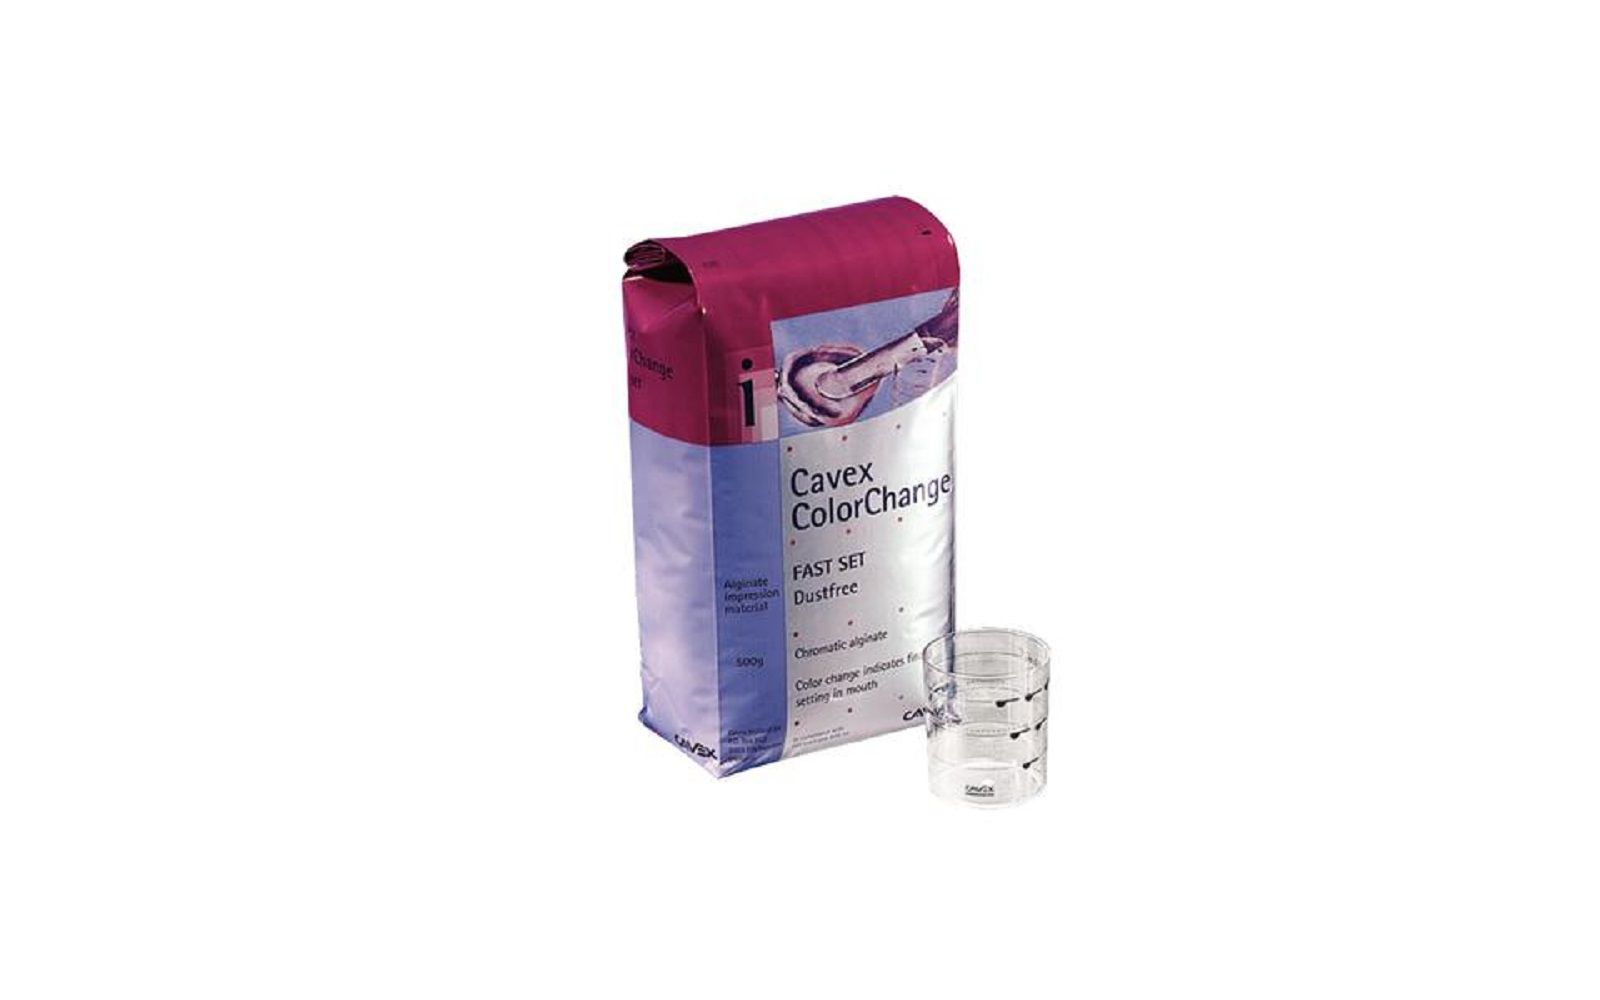 Cavex colorchange alginate, 1 lb bag